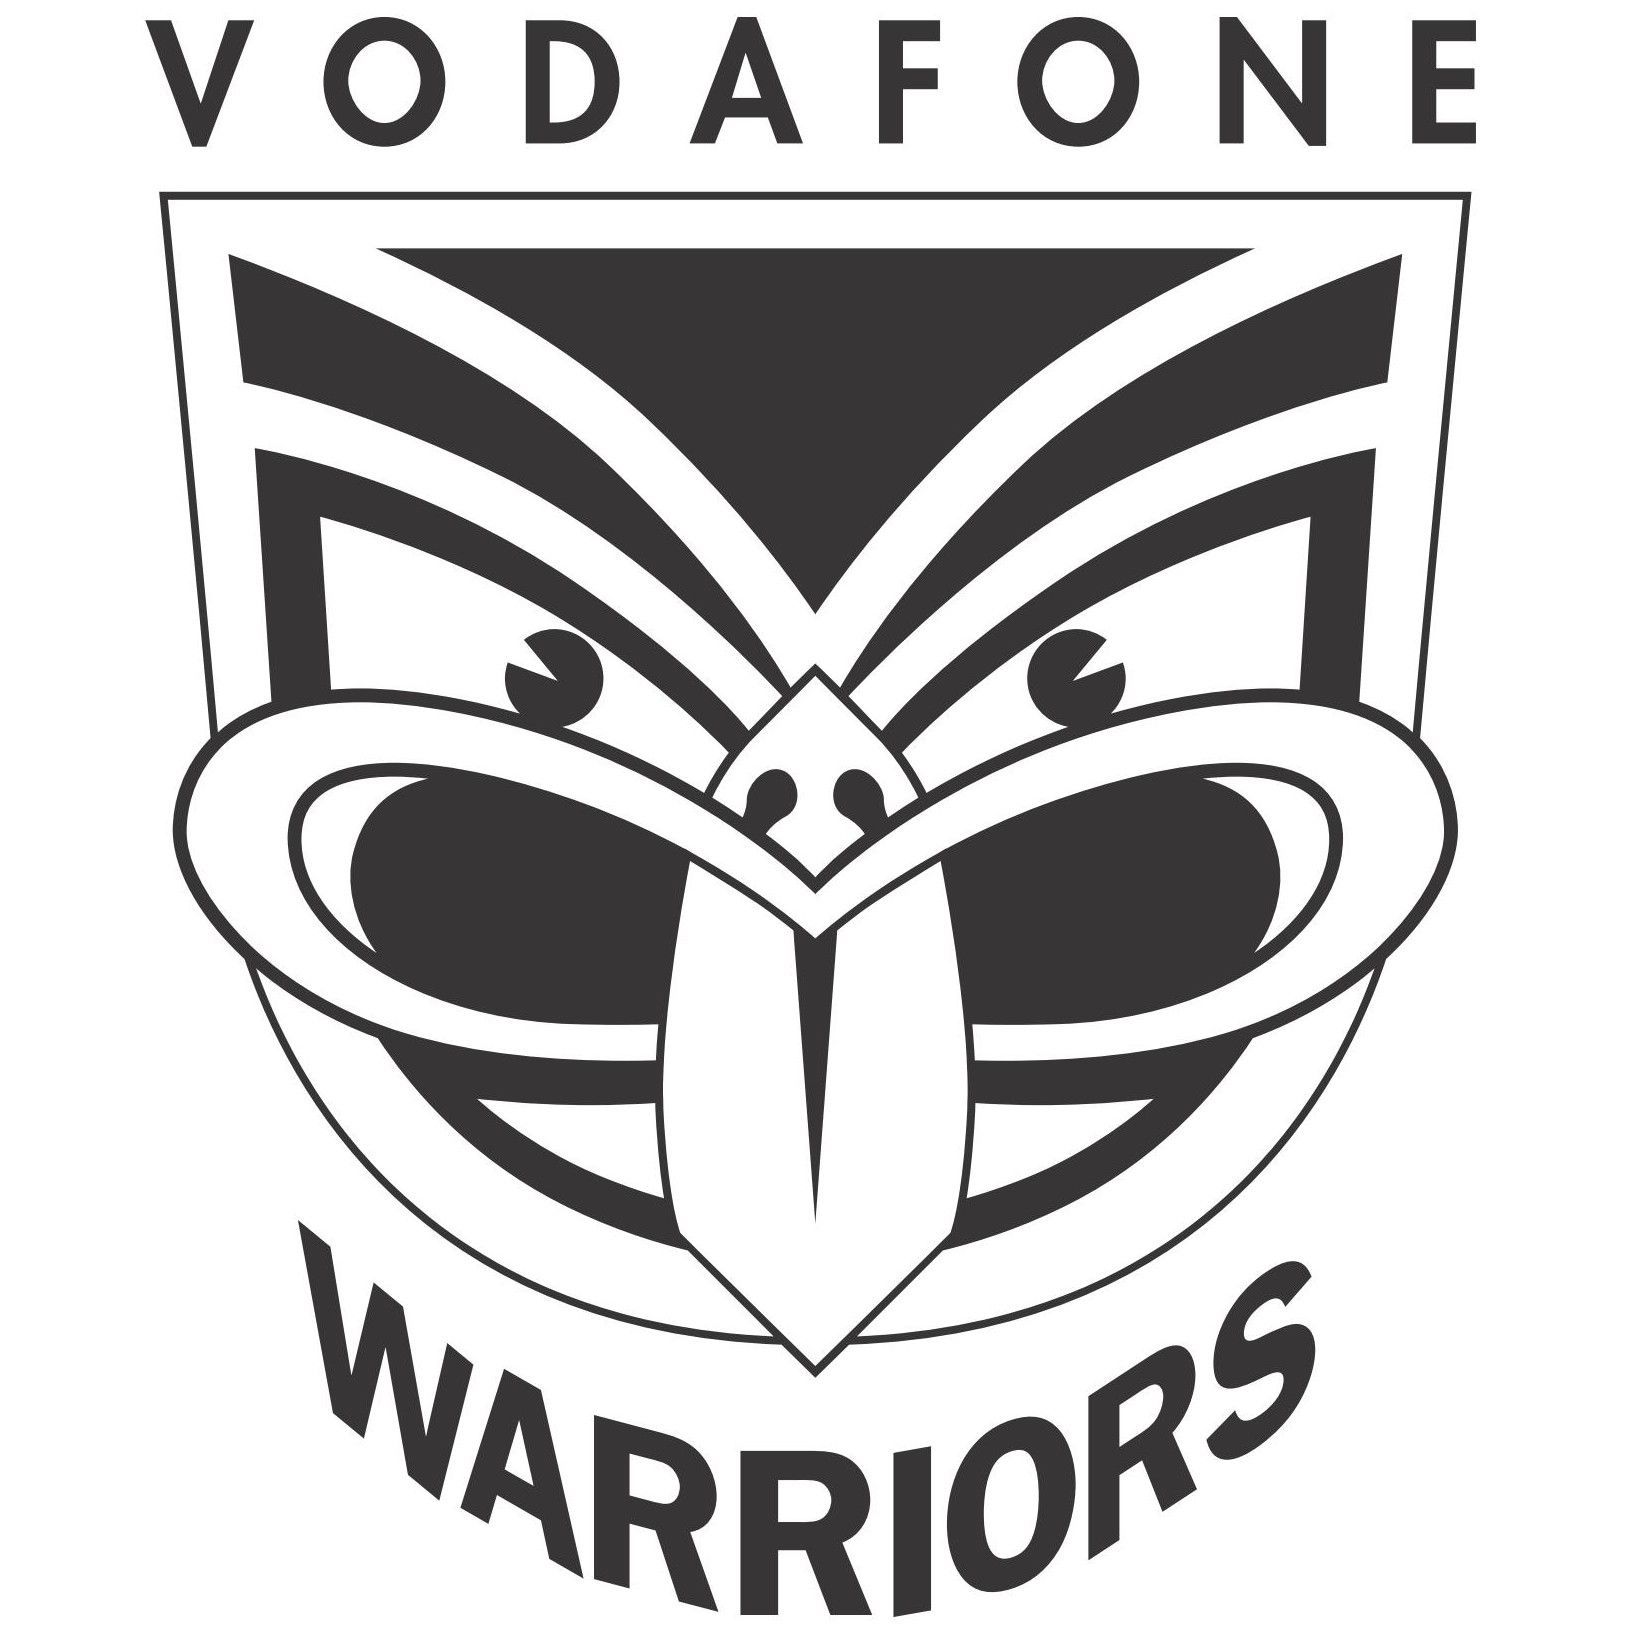 Vodafone Warriors